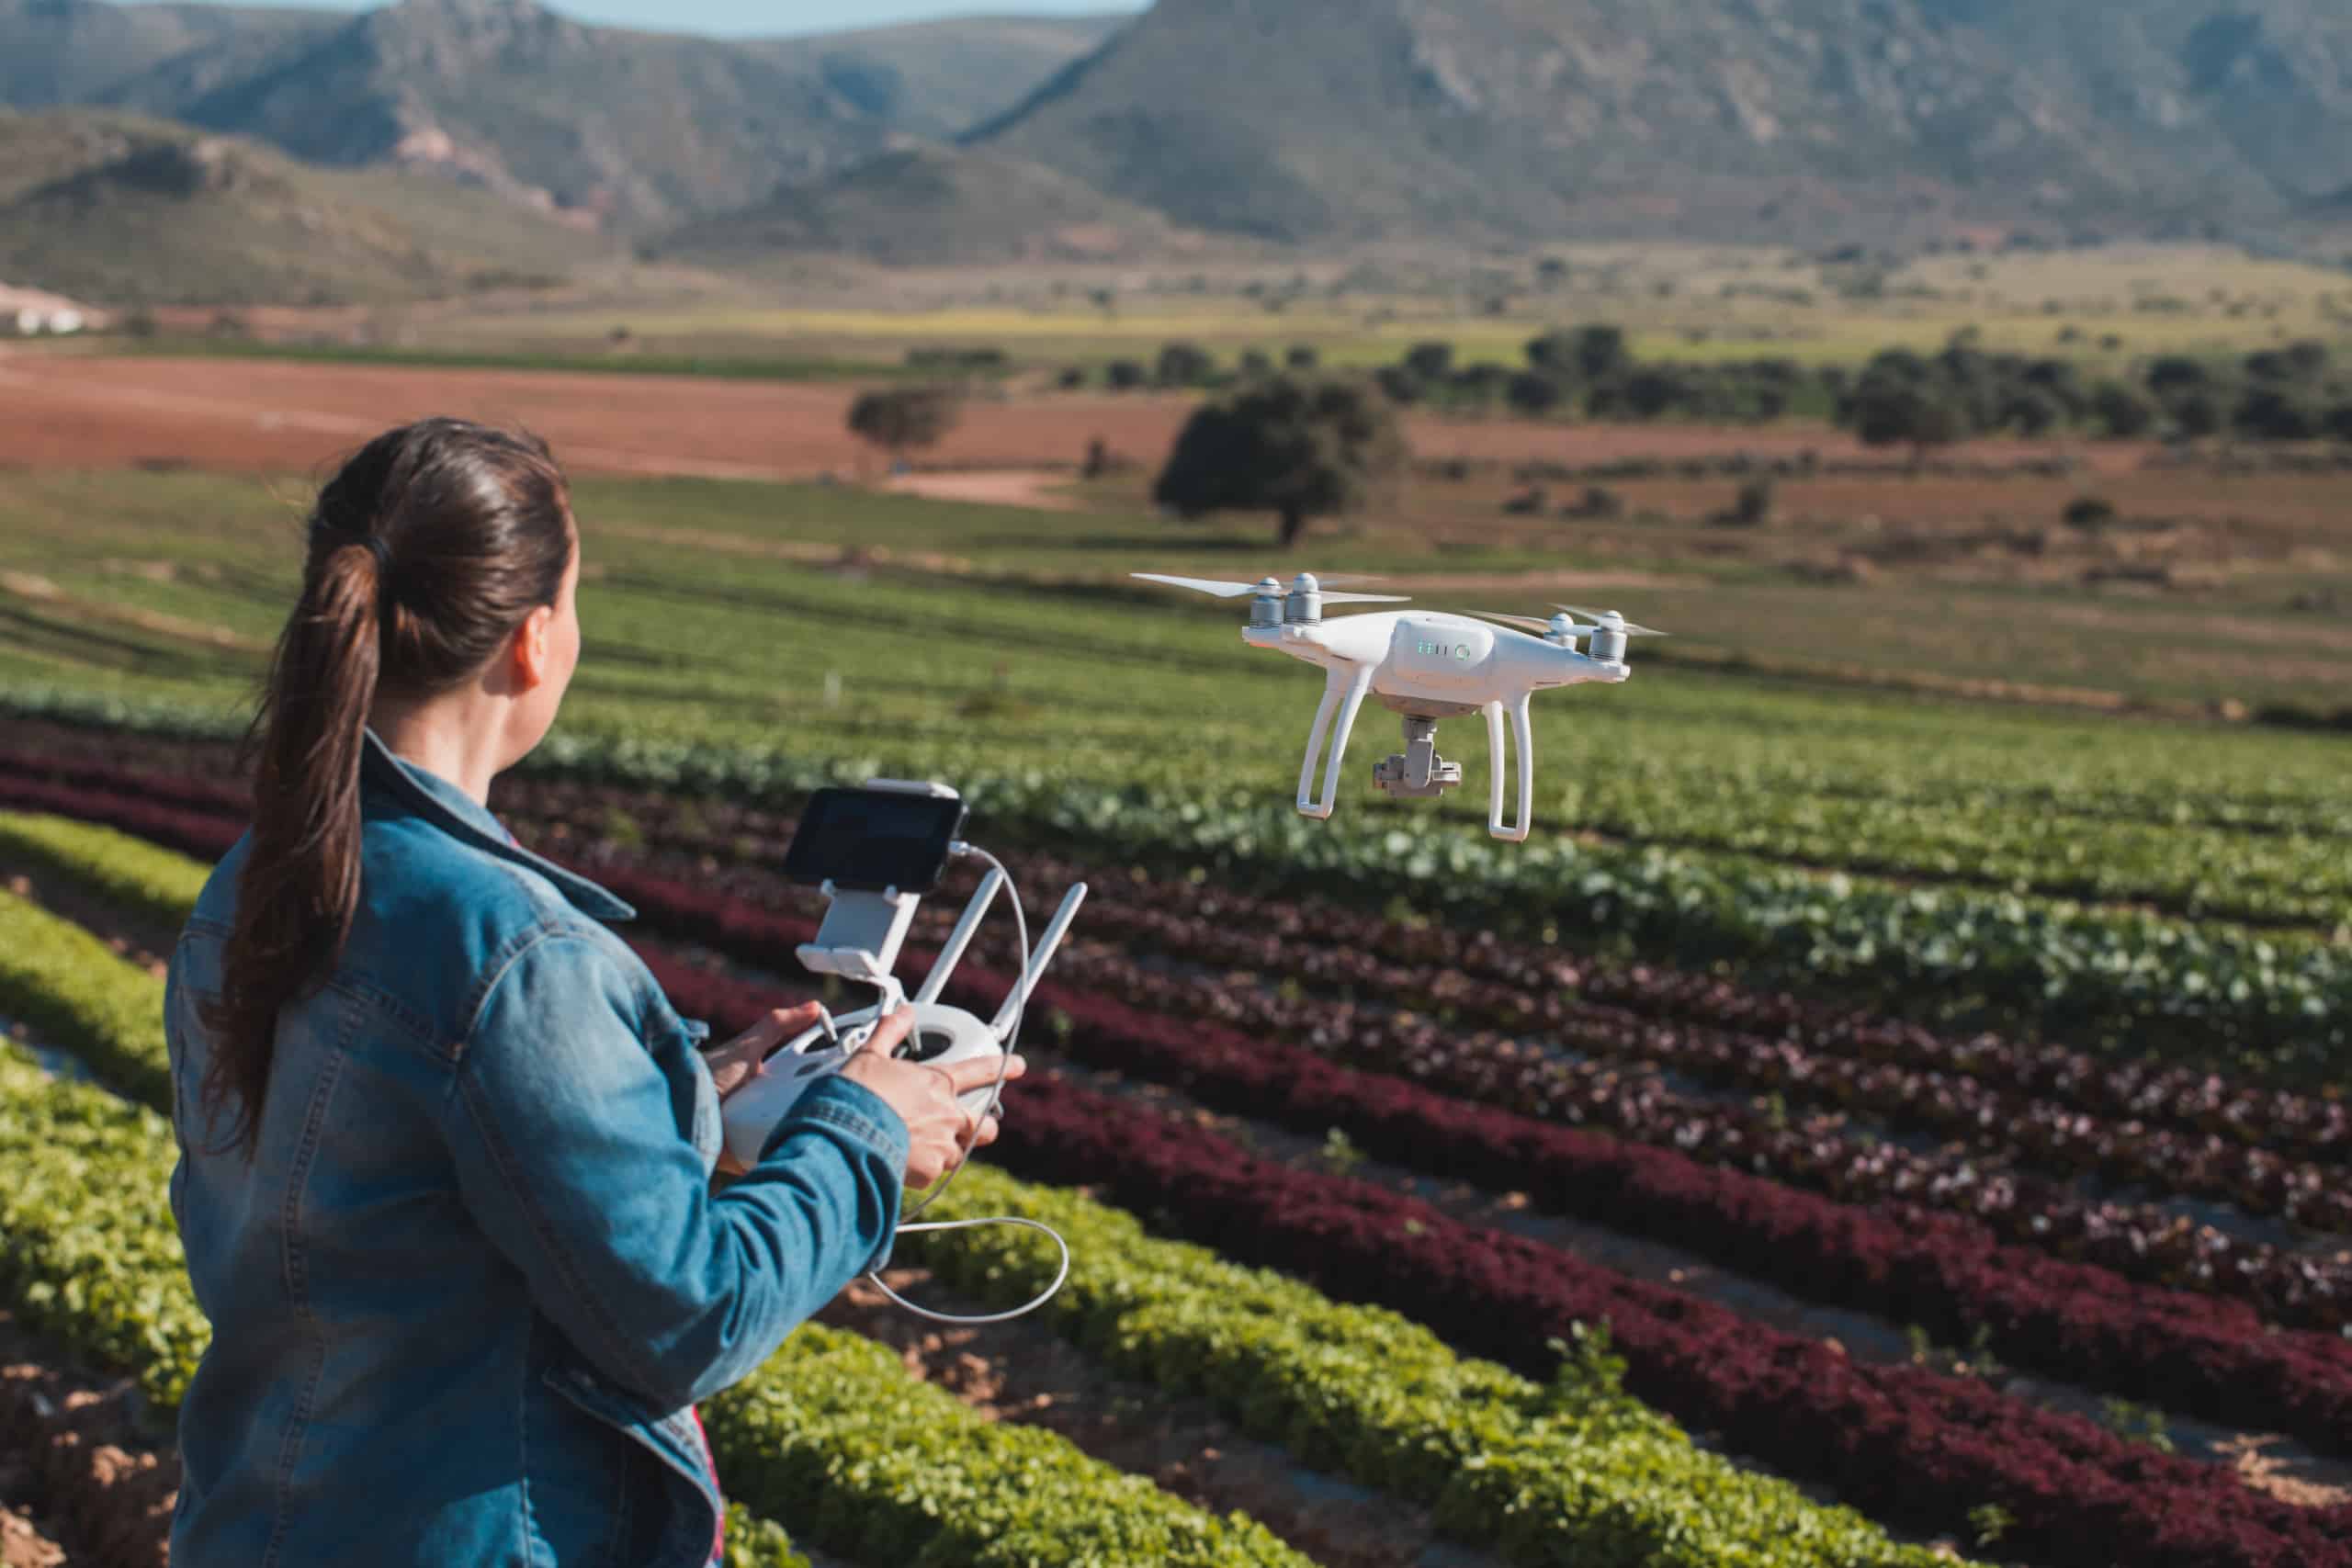 A women using a drone in a field of crops.